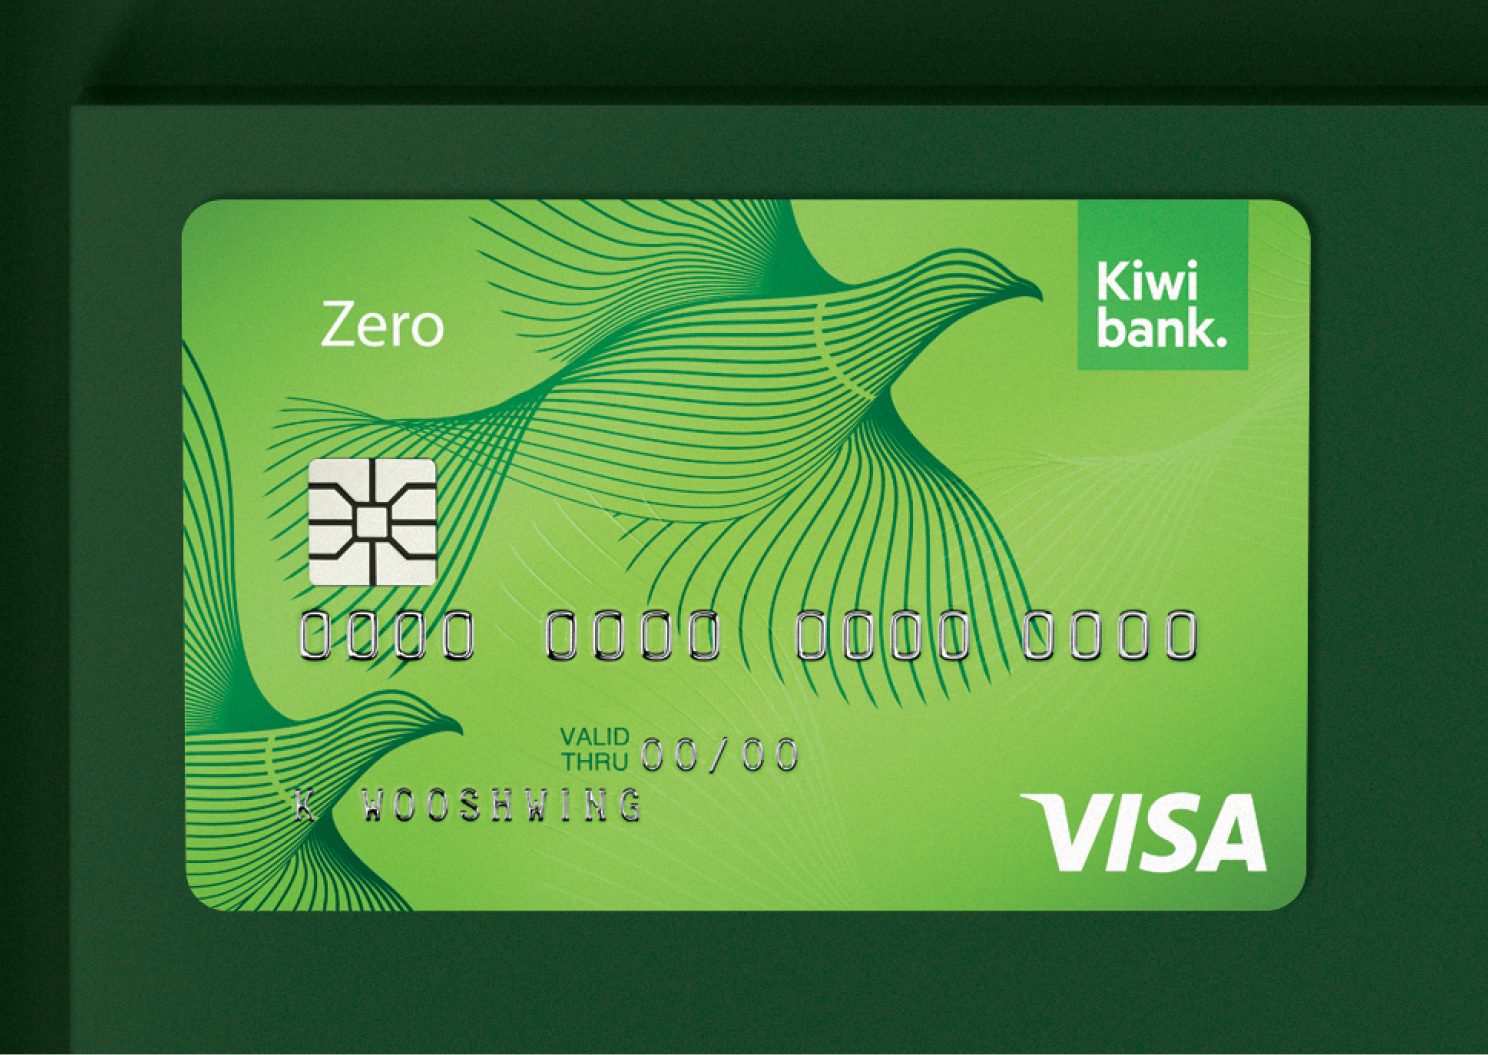 Kiwibank Zero visa card